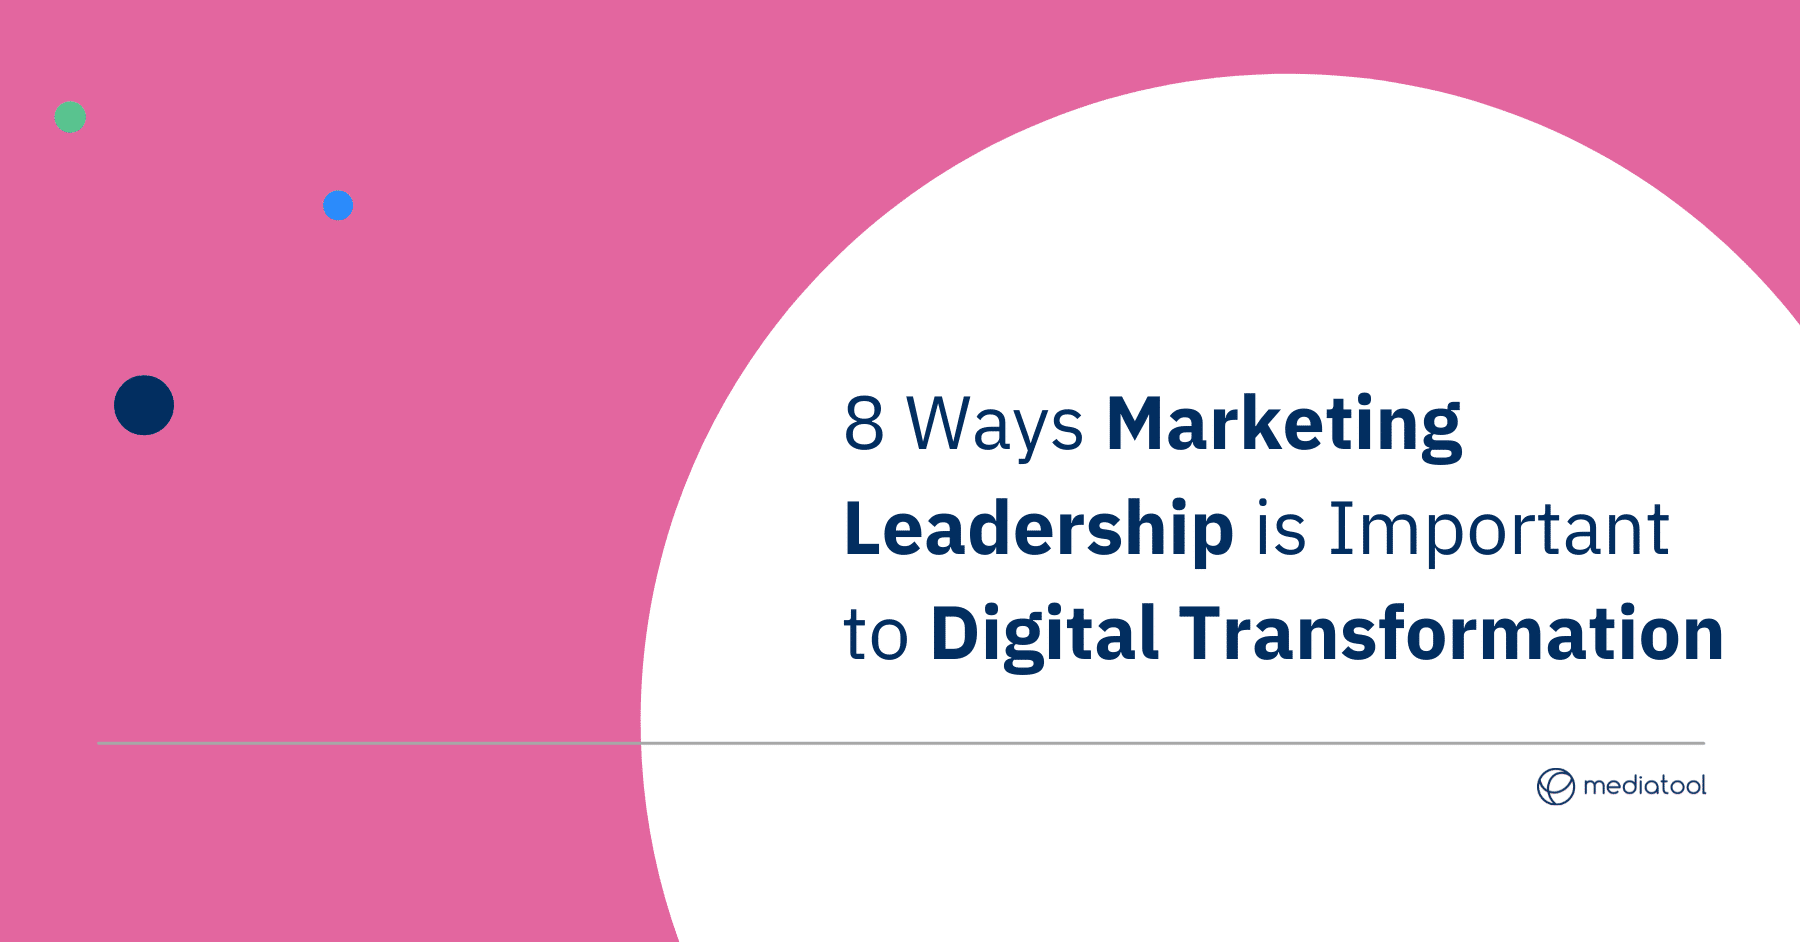 8 Ways Marketing Leadership is Important to Digital Transformation